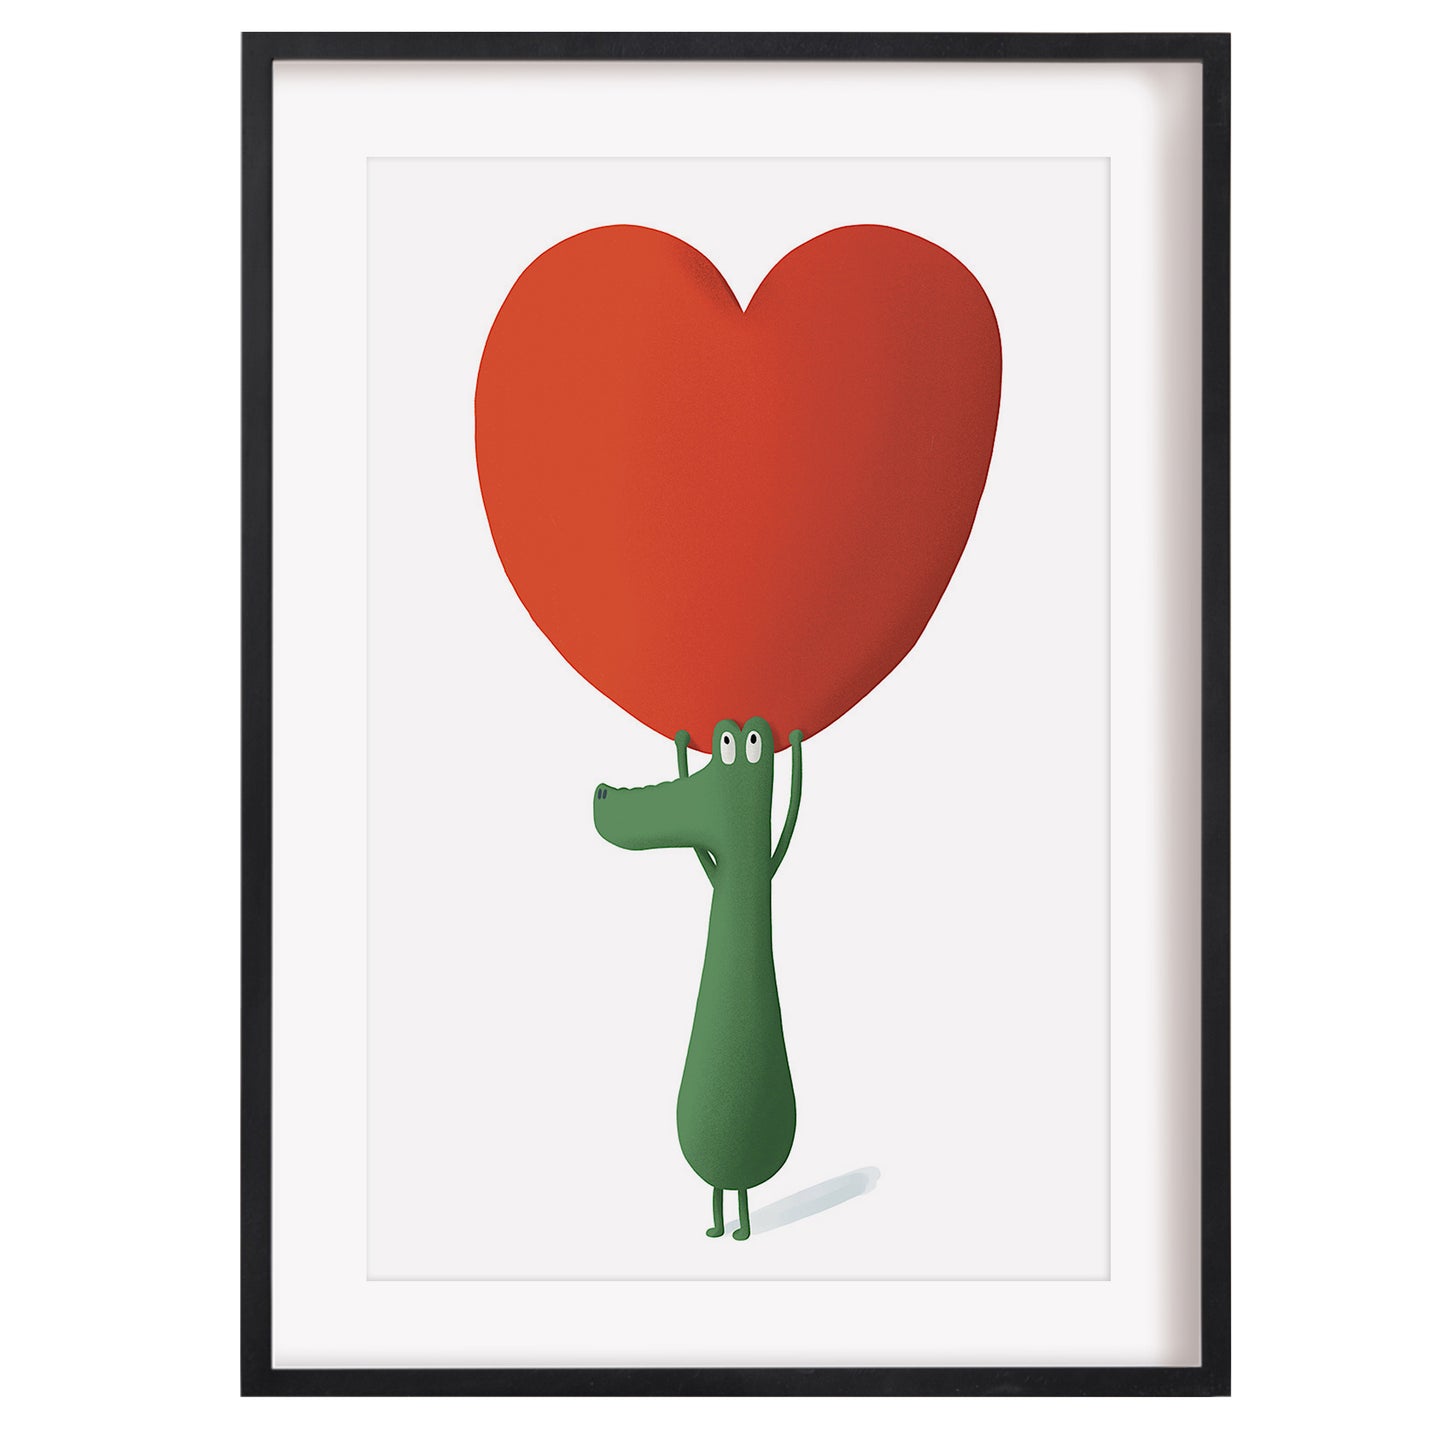 Frank with a heart art print